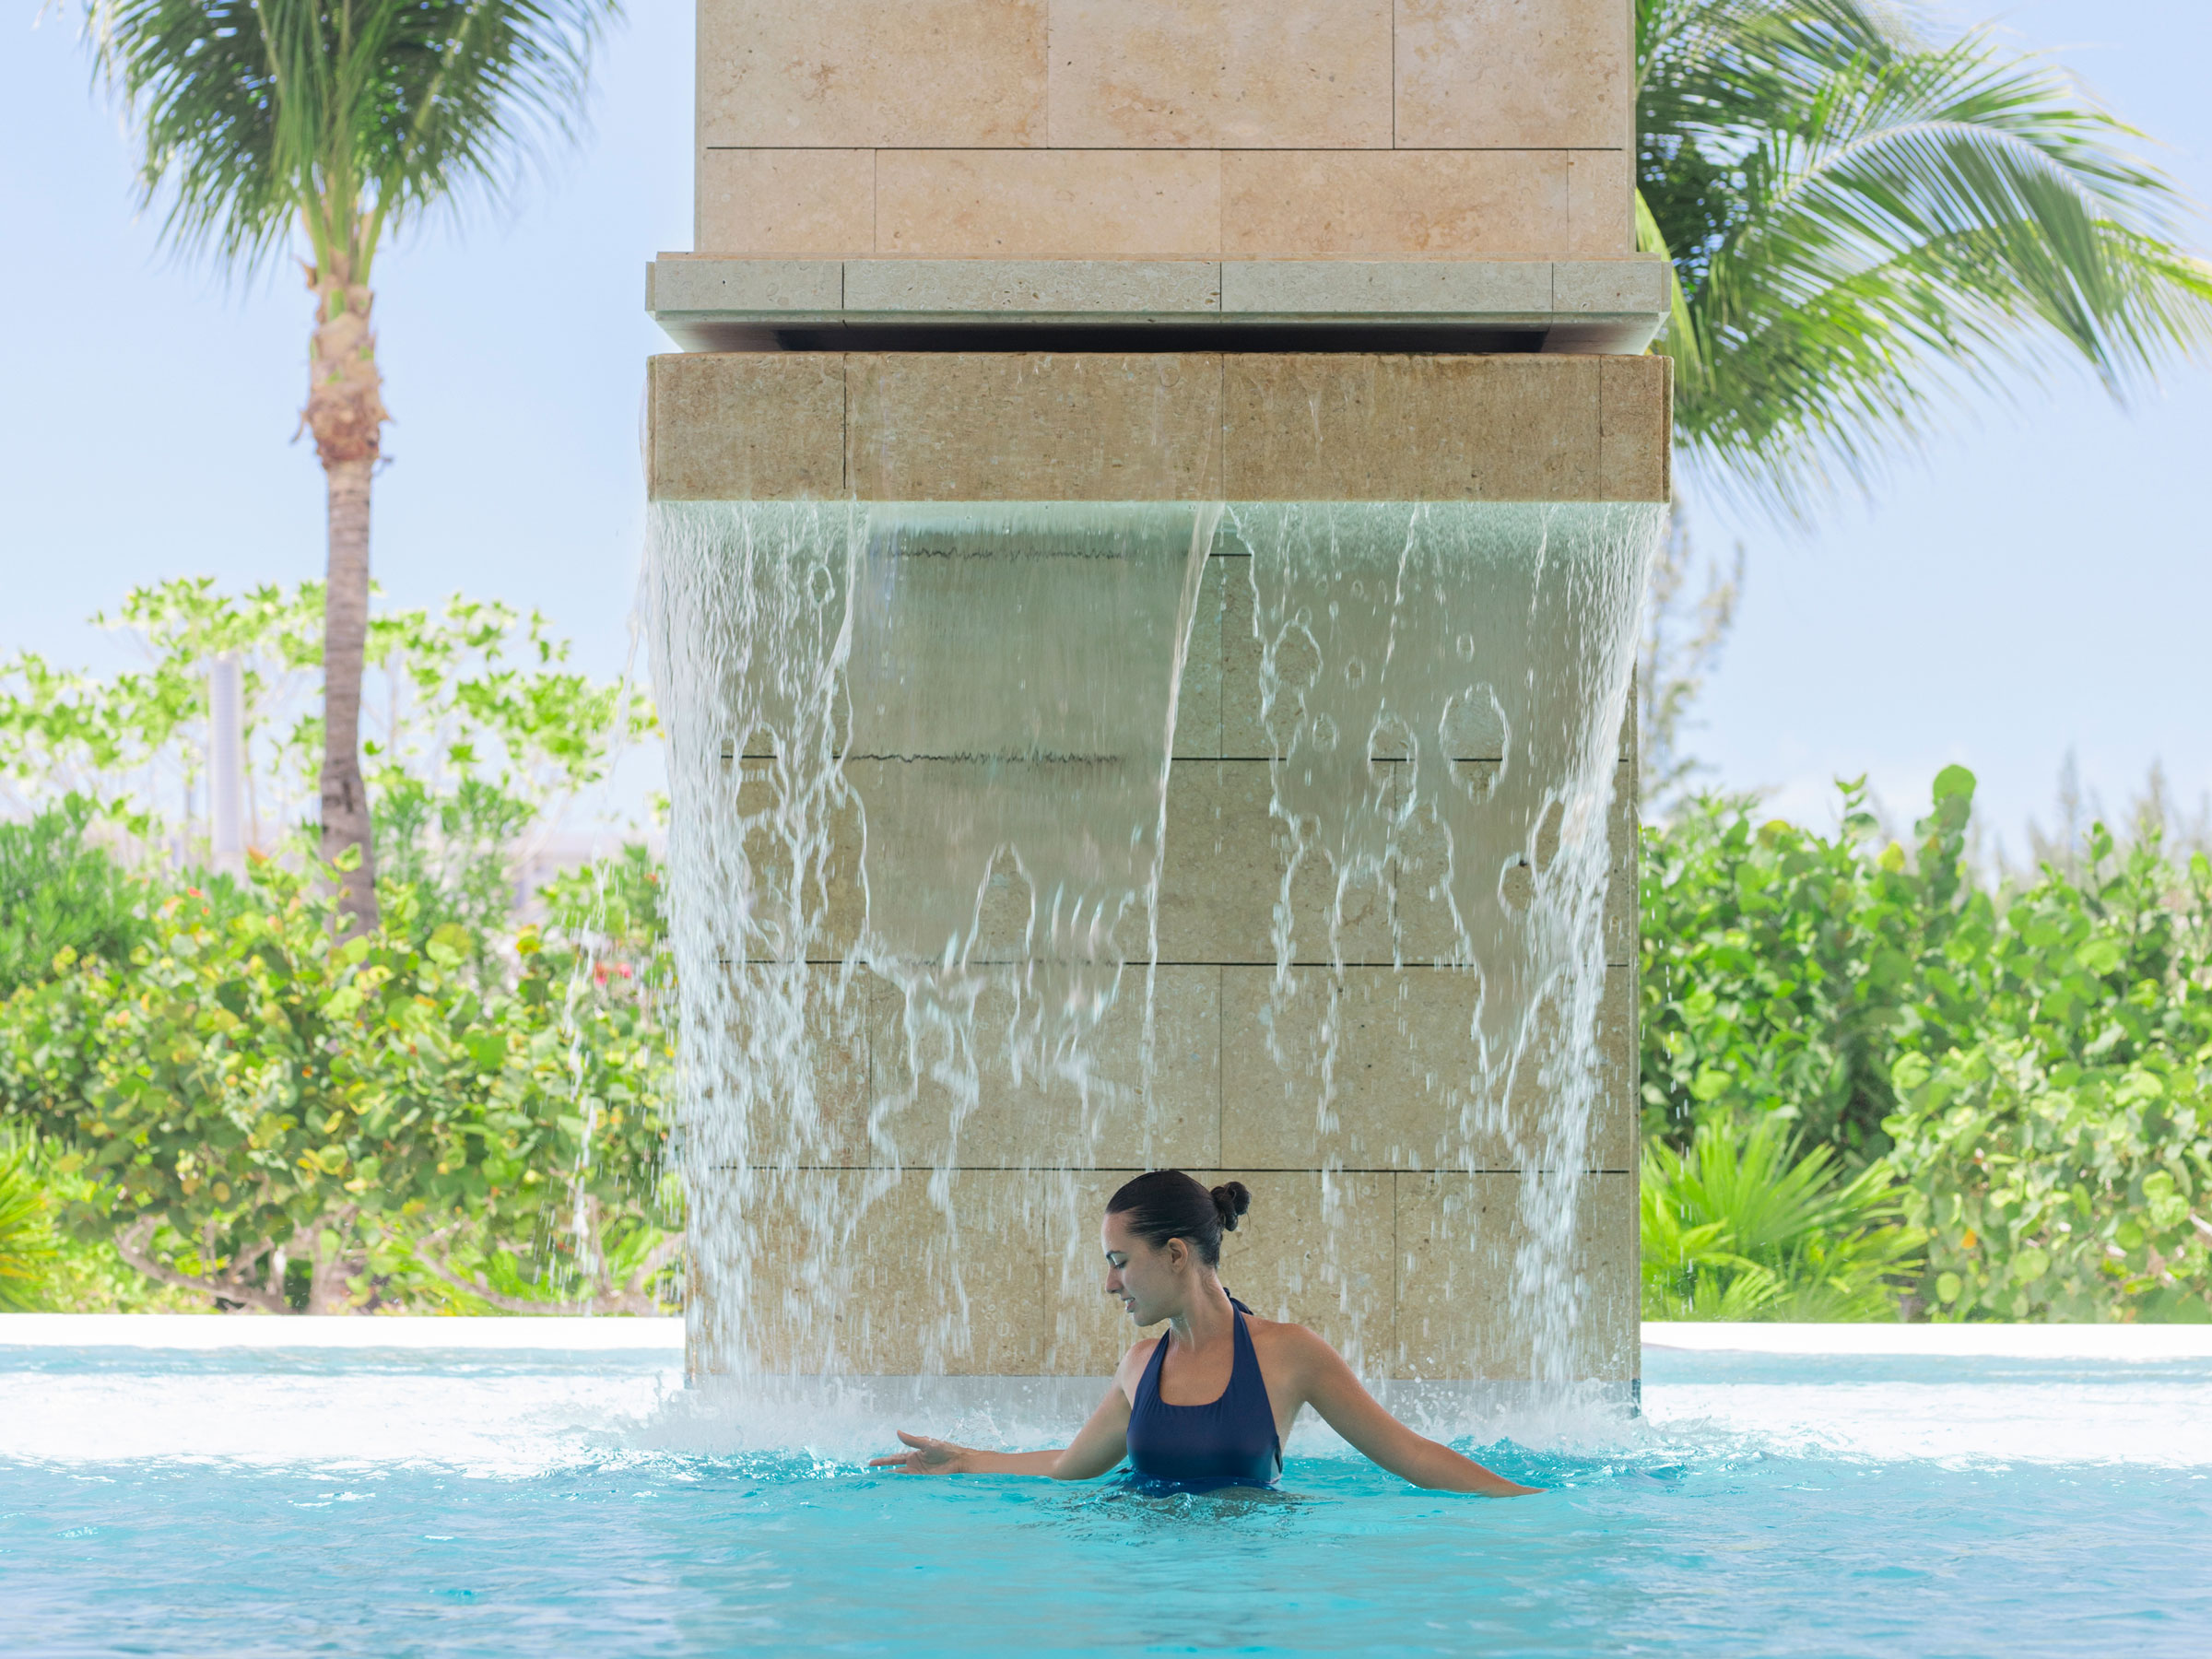 Luxury Spa Hotel Treatments in Cancun